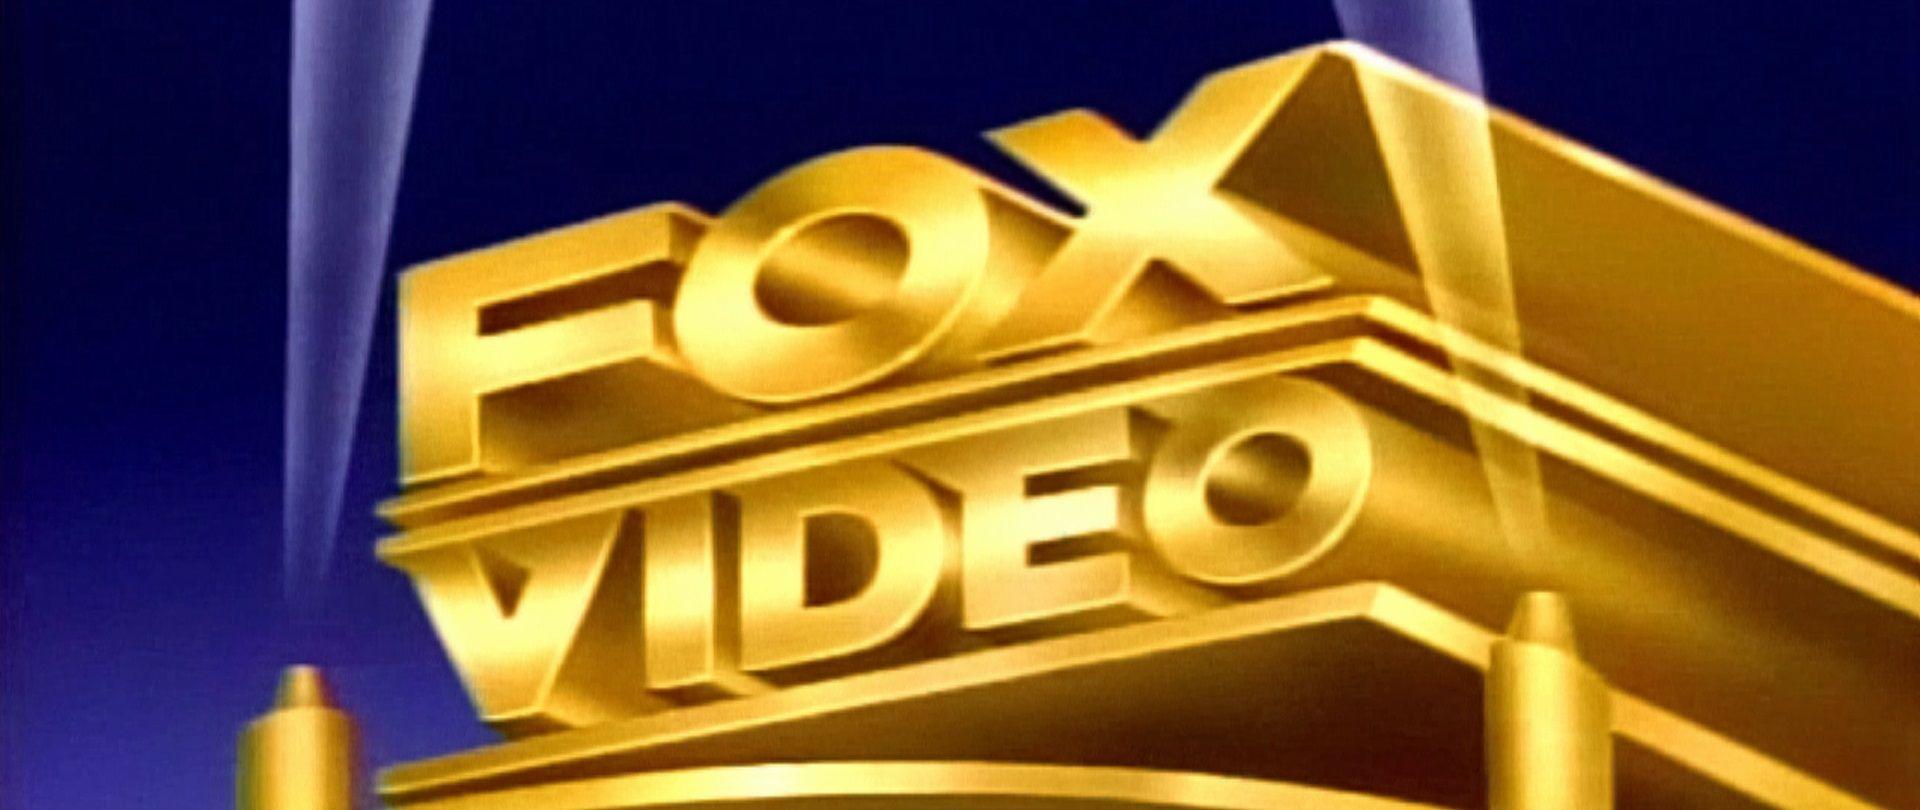 Gold Entertainment Logo - Fox Video/Other | Logopedia | FANDOM powered by Wikia